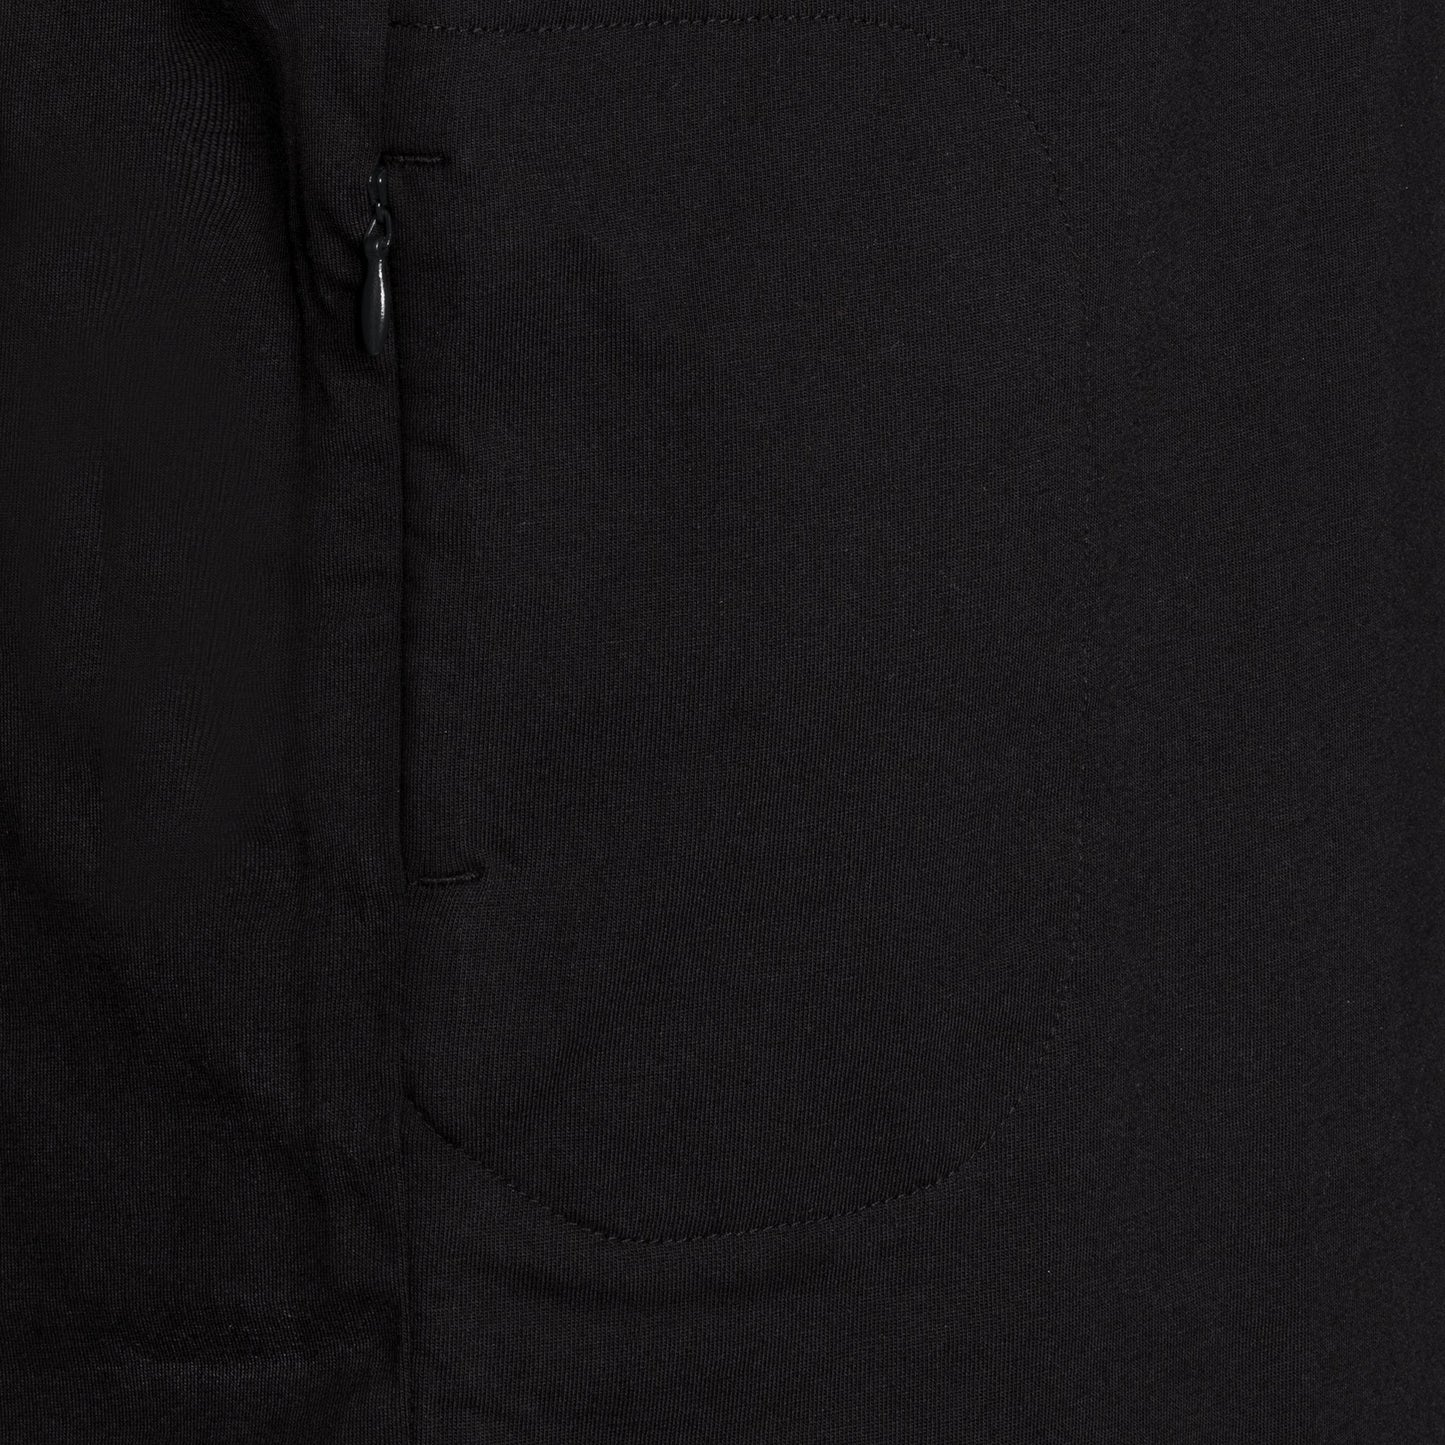 SPYSCAPE Hacker T- Shirt with Hidden Zip Pocket - close up of hidden pocket